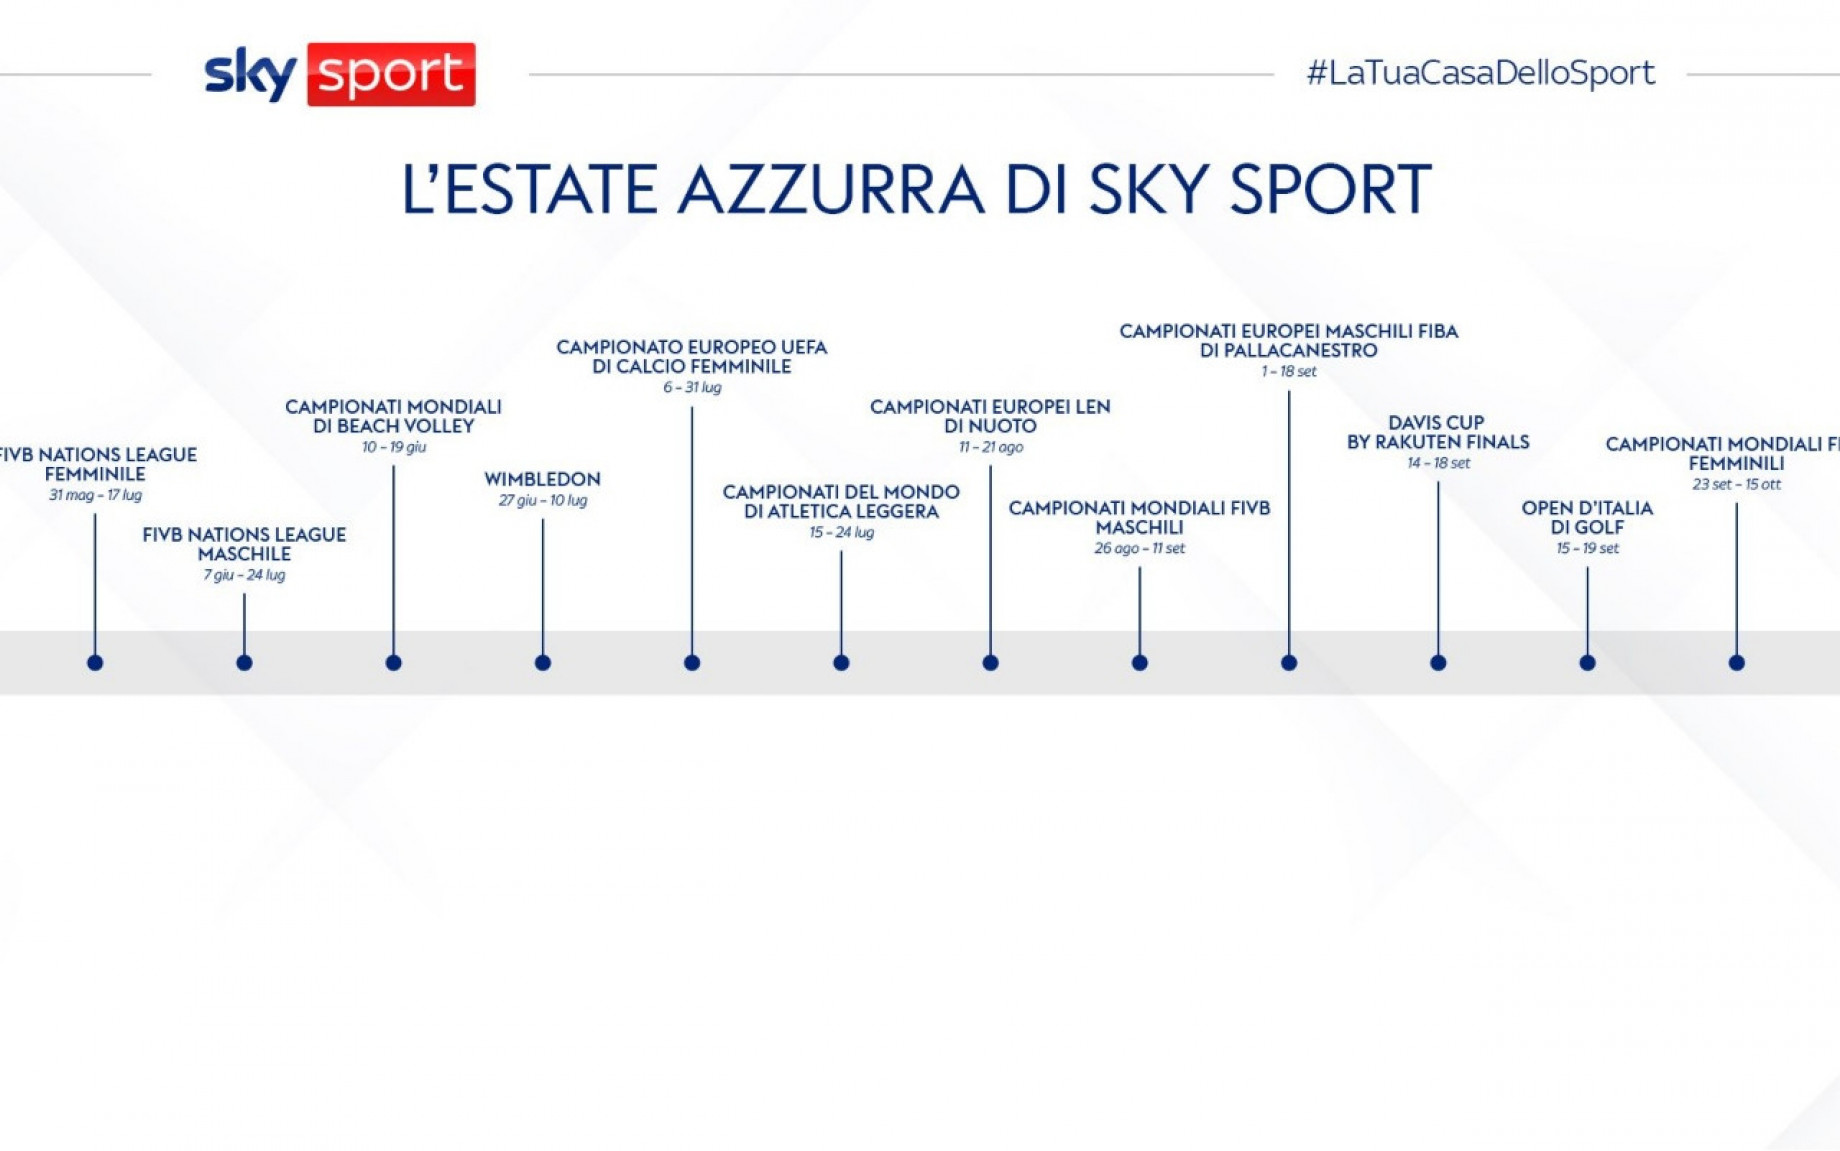 sky_sport_estate_azzurra_screen_gpo.jpg